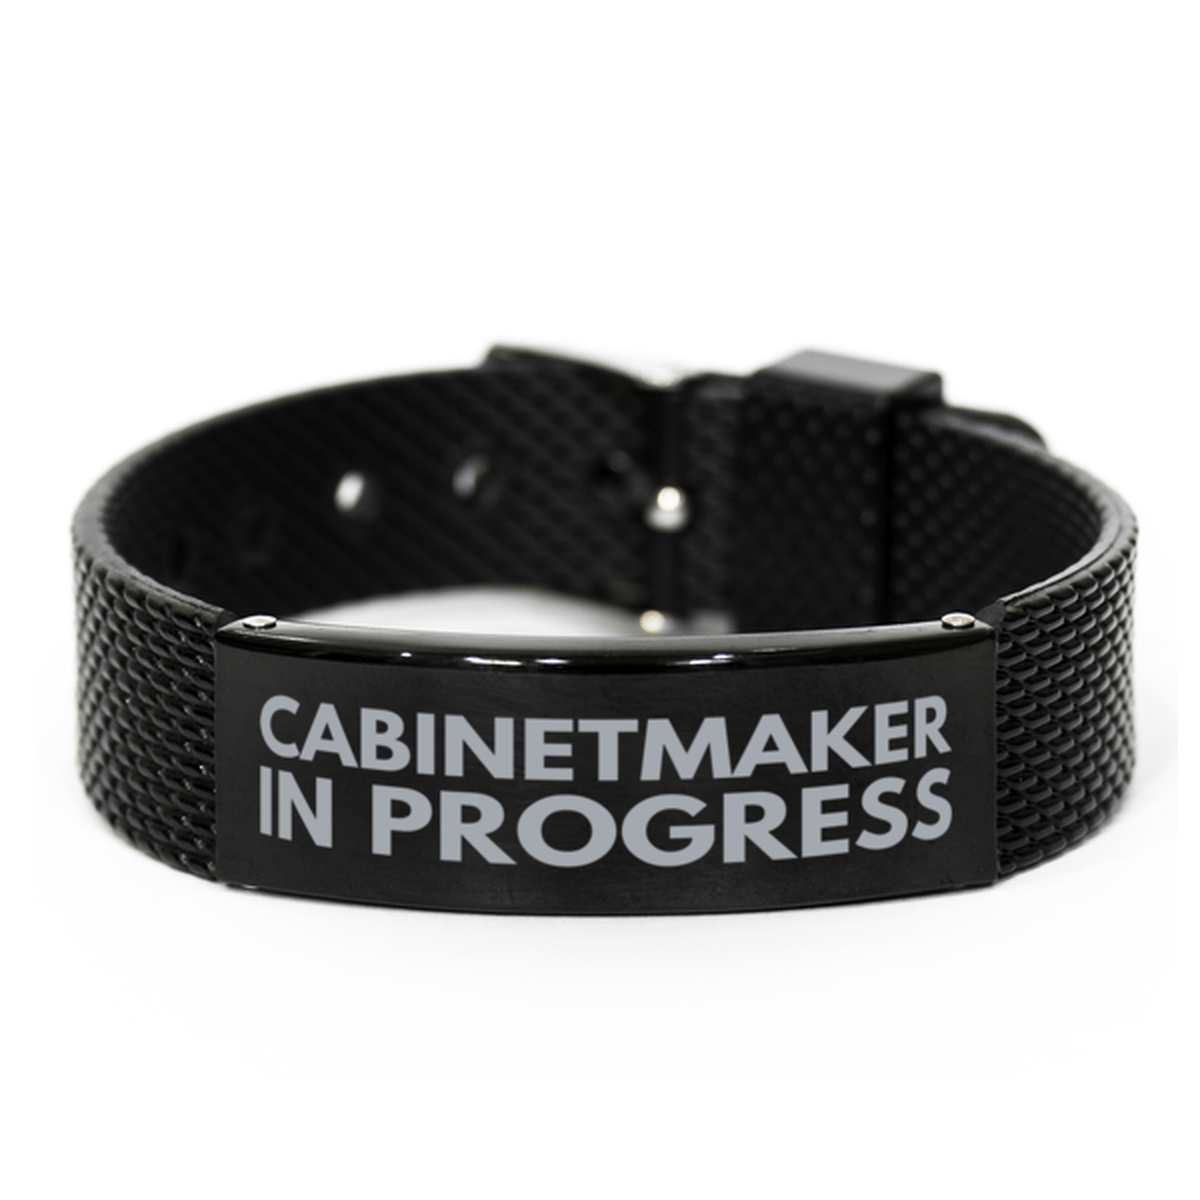 Inspirational Cabinetmaker Black Shark Mesh Bracelet, Cabinetmaker In Progress, Best Graduation Gifts for Students